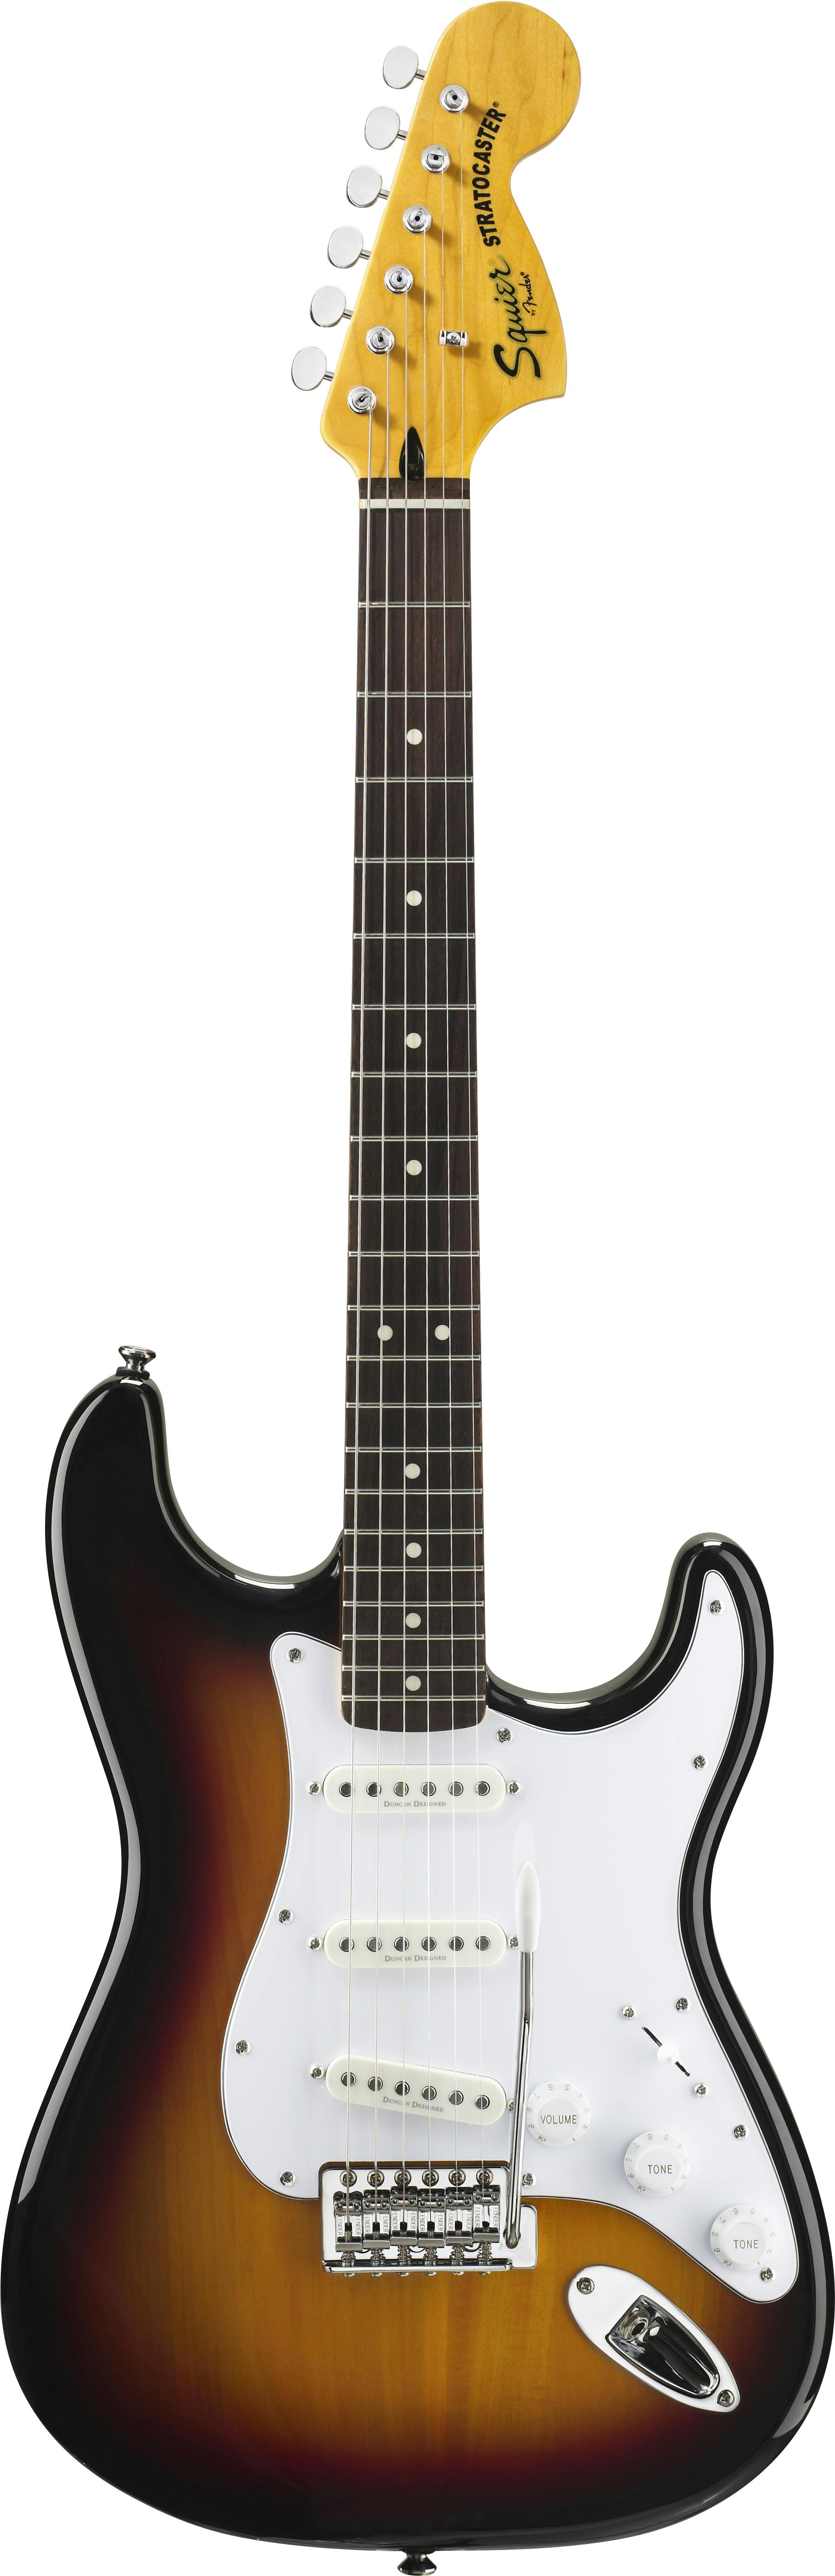 Squier Vintage Modified Stratocaster in 3-Tone Sunburst